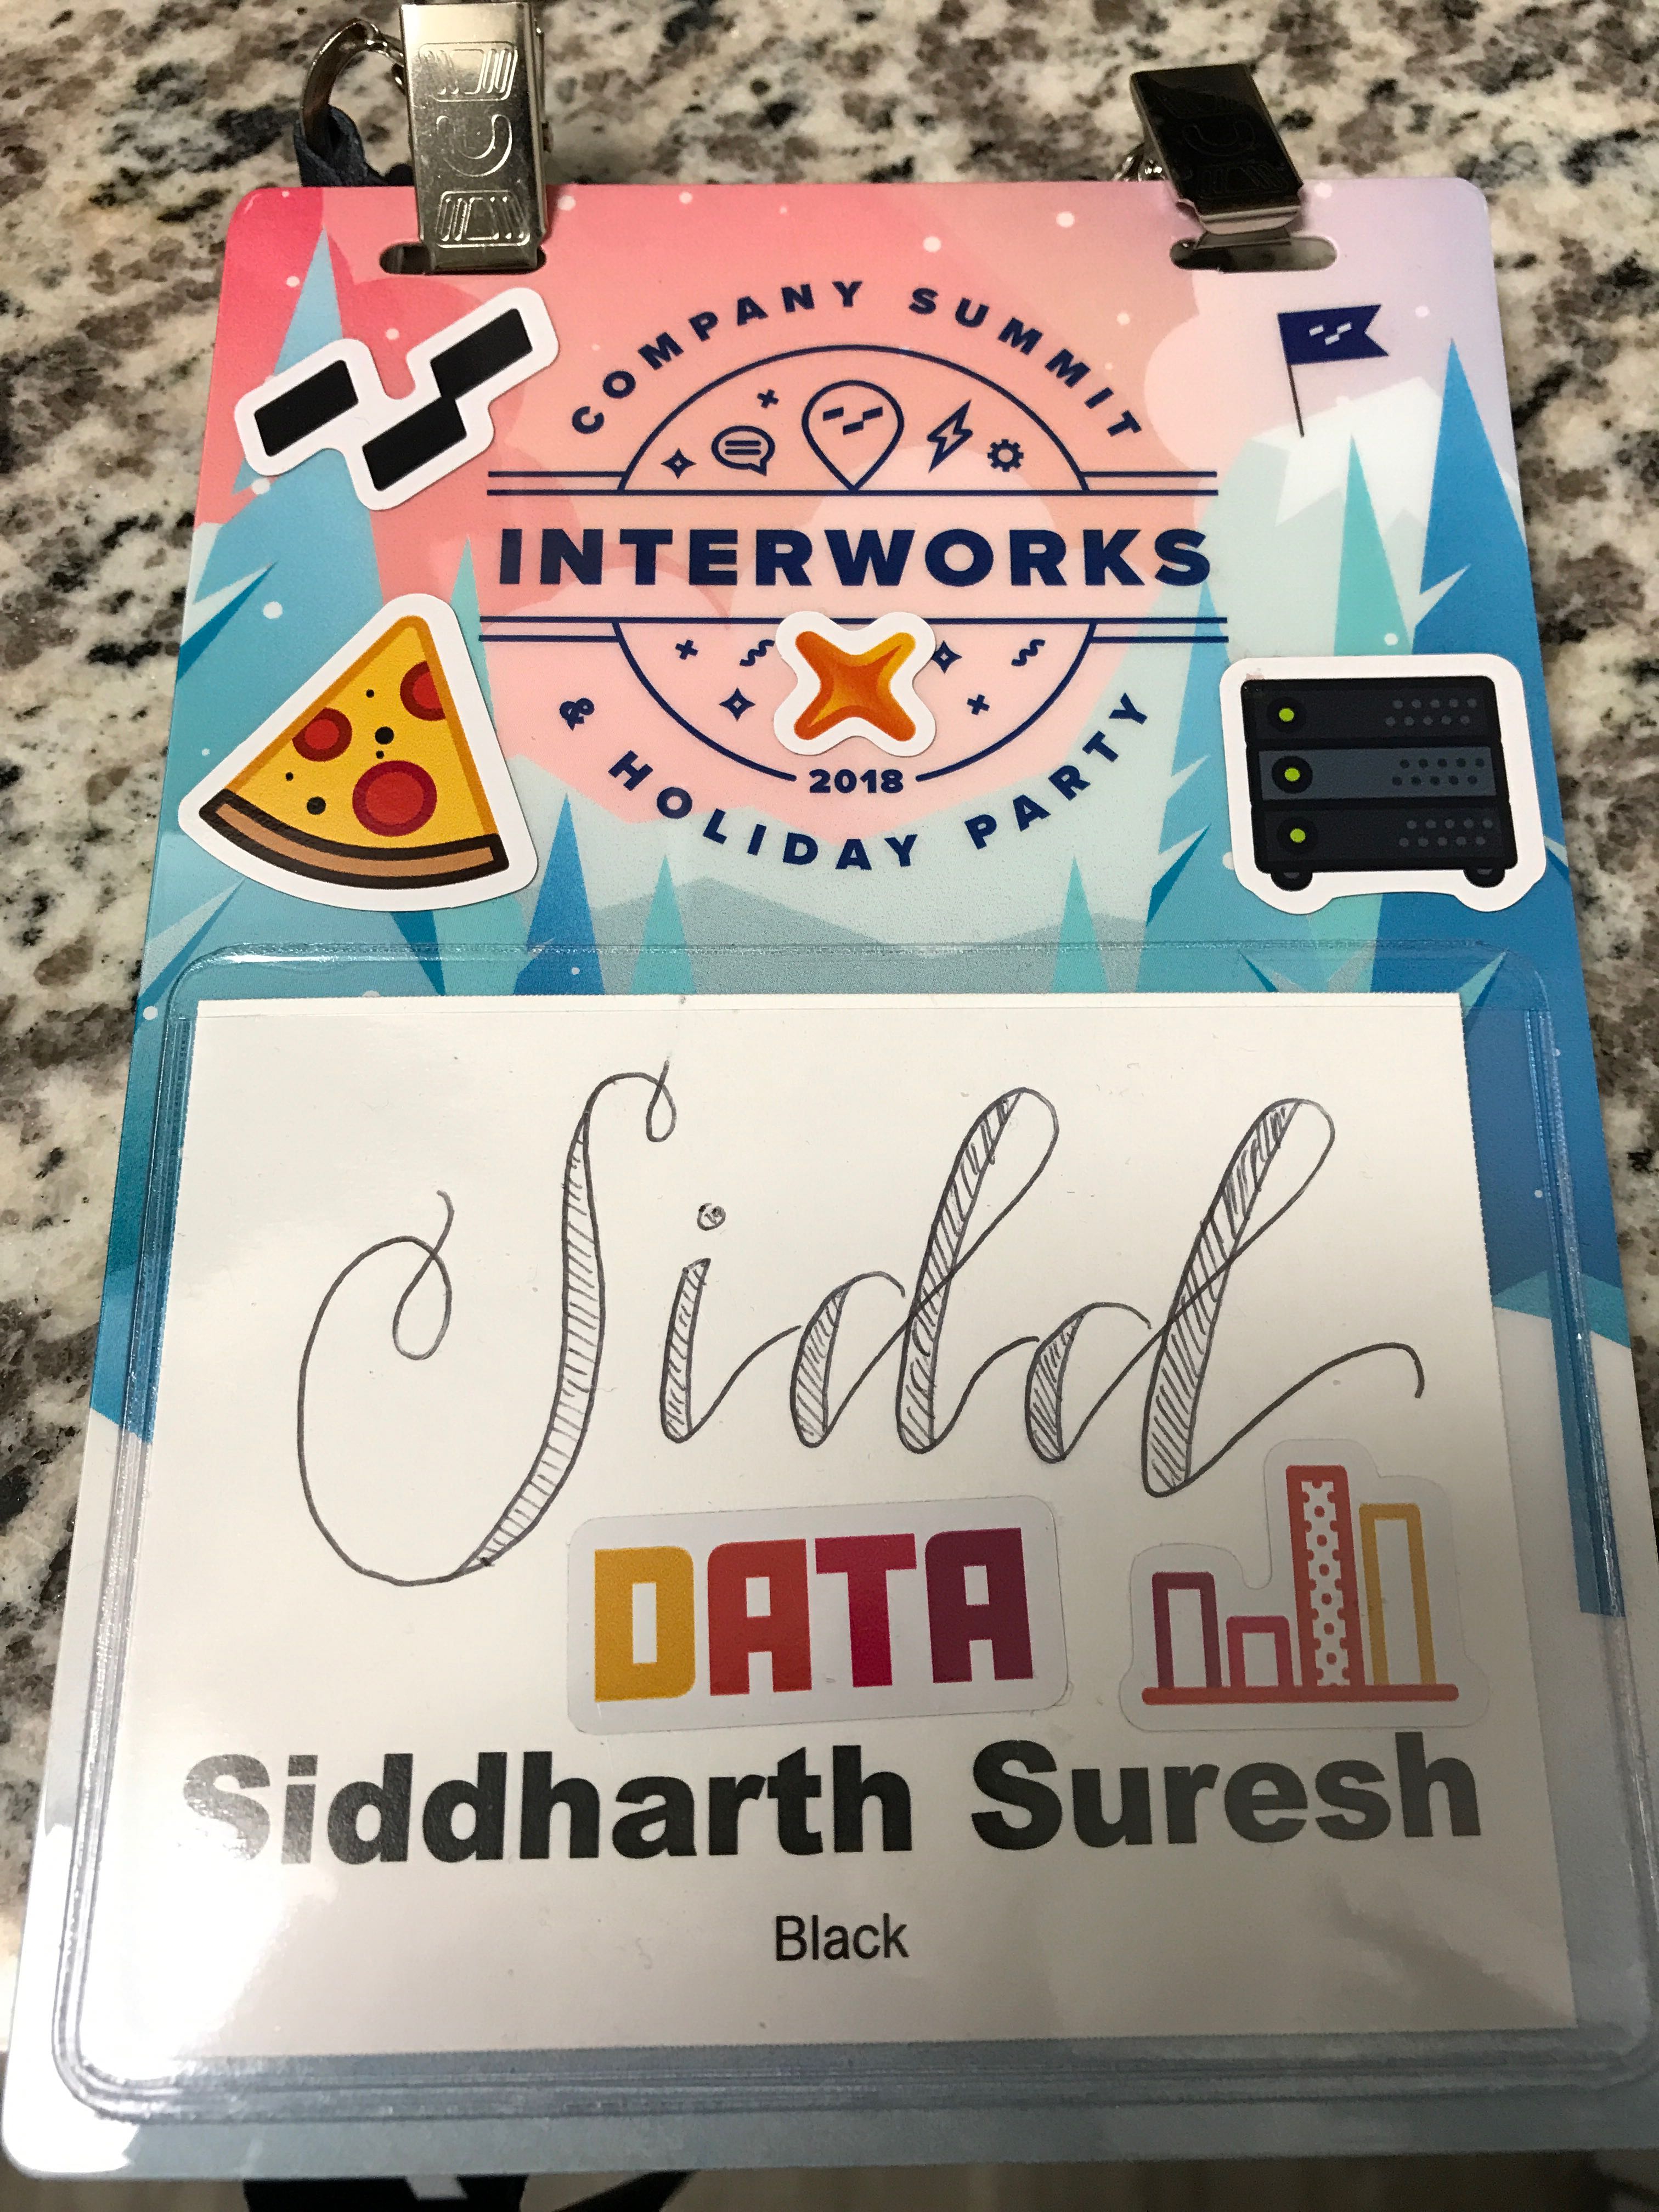 InterWorks Summit name badge